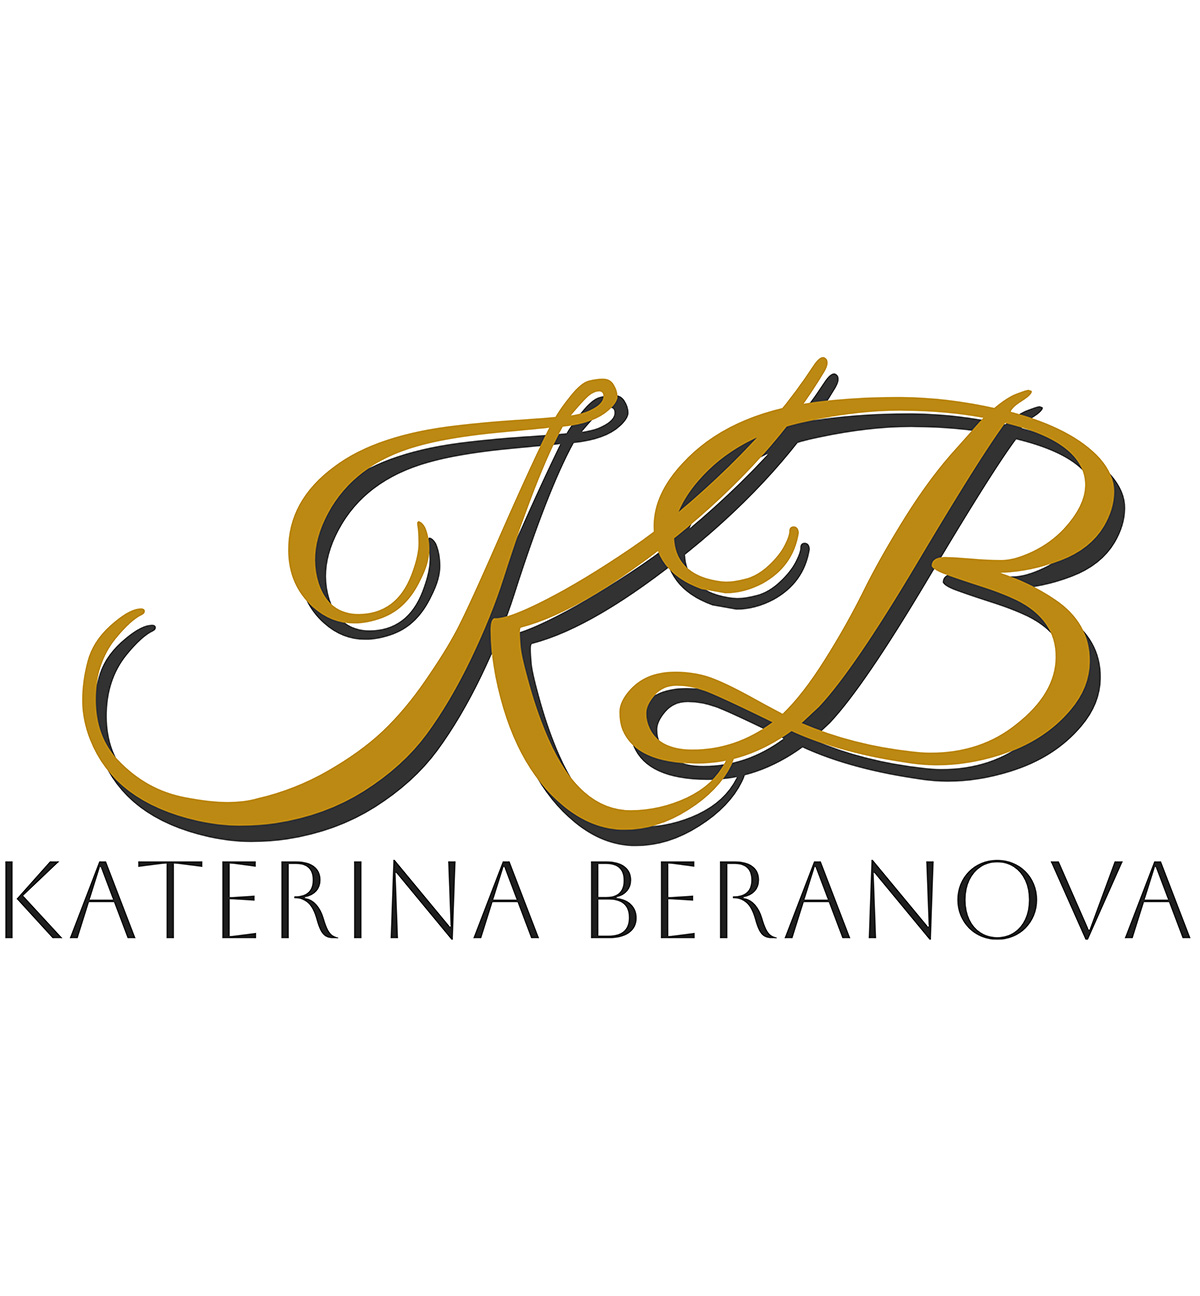 Katerina Beranova - Koloratursopranistin und Gesangsdozentin